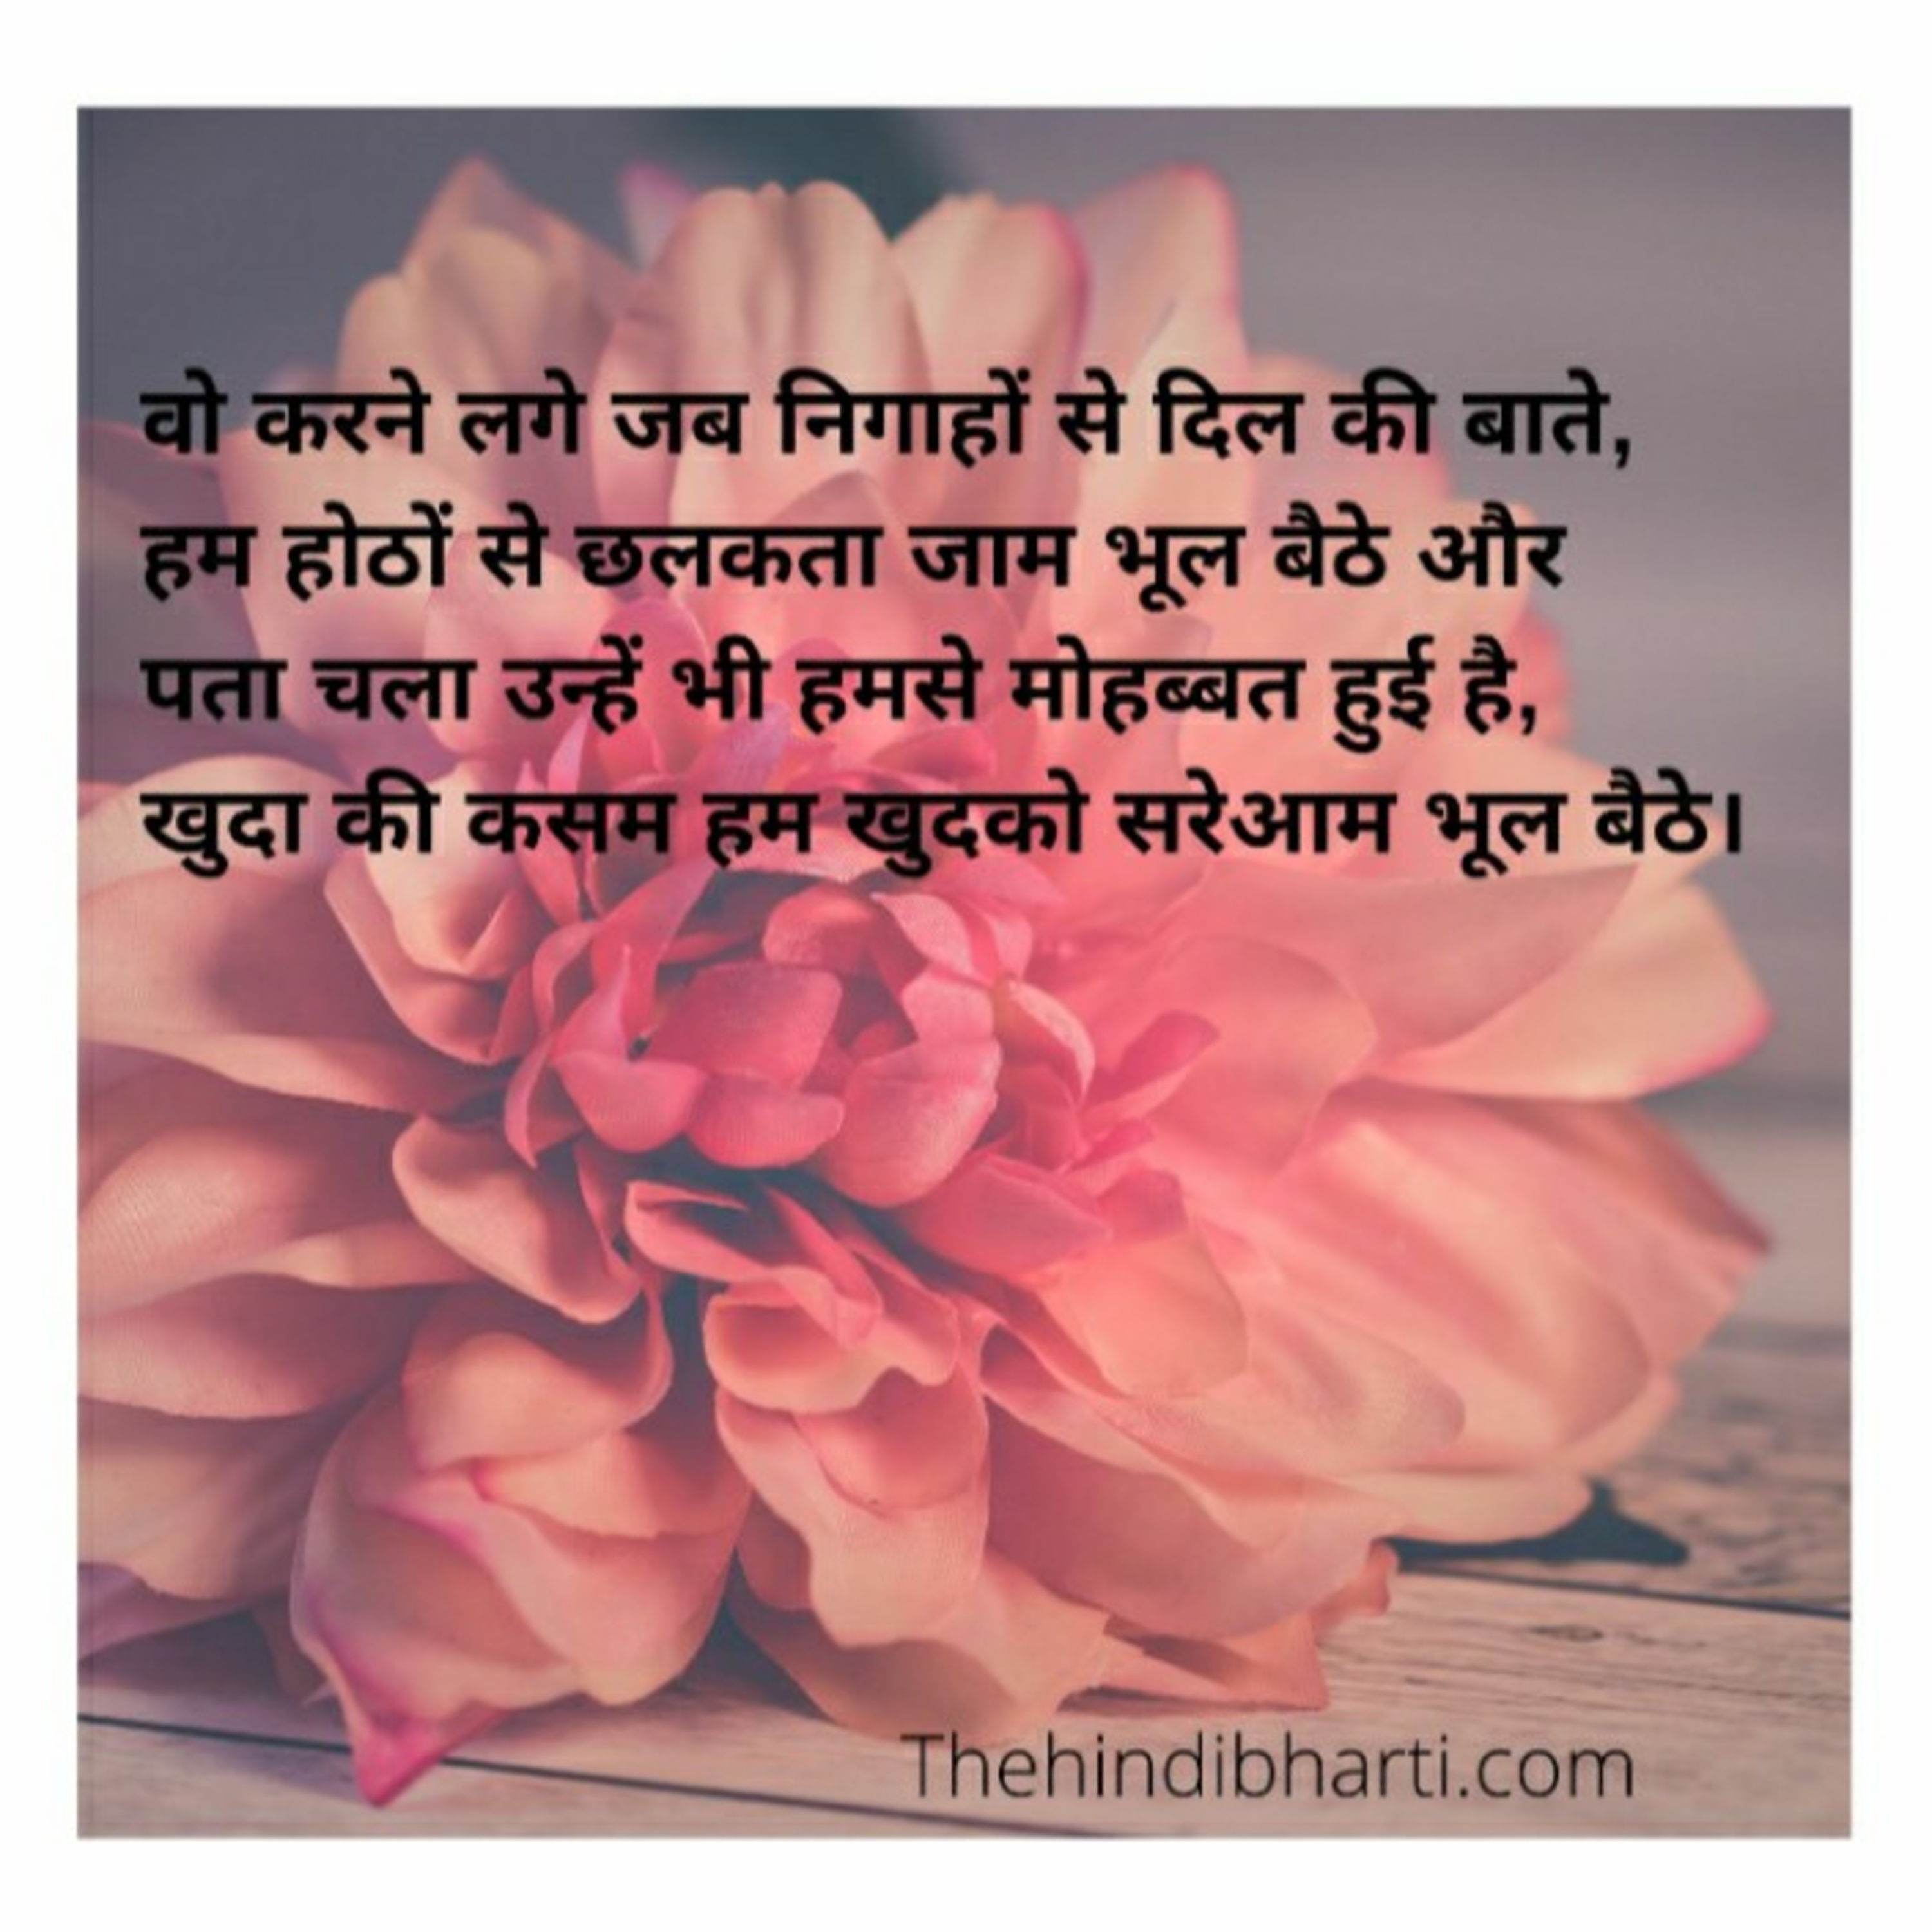 प्यार शायरी❤️ । Love shayari in hindi